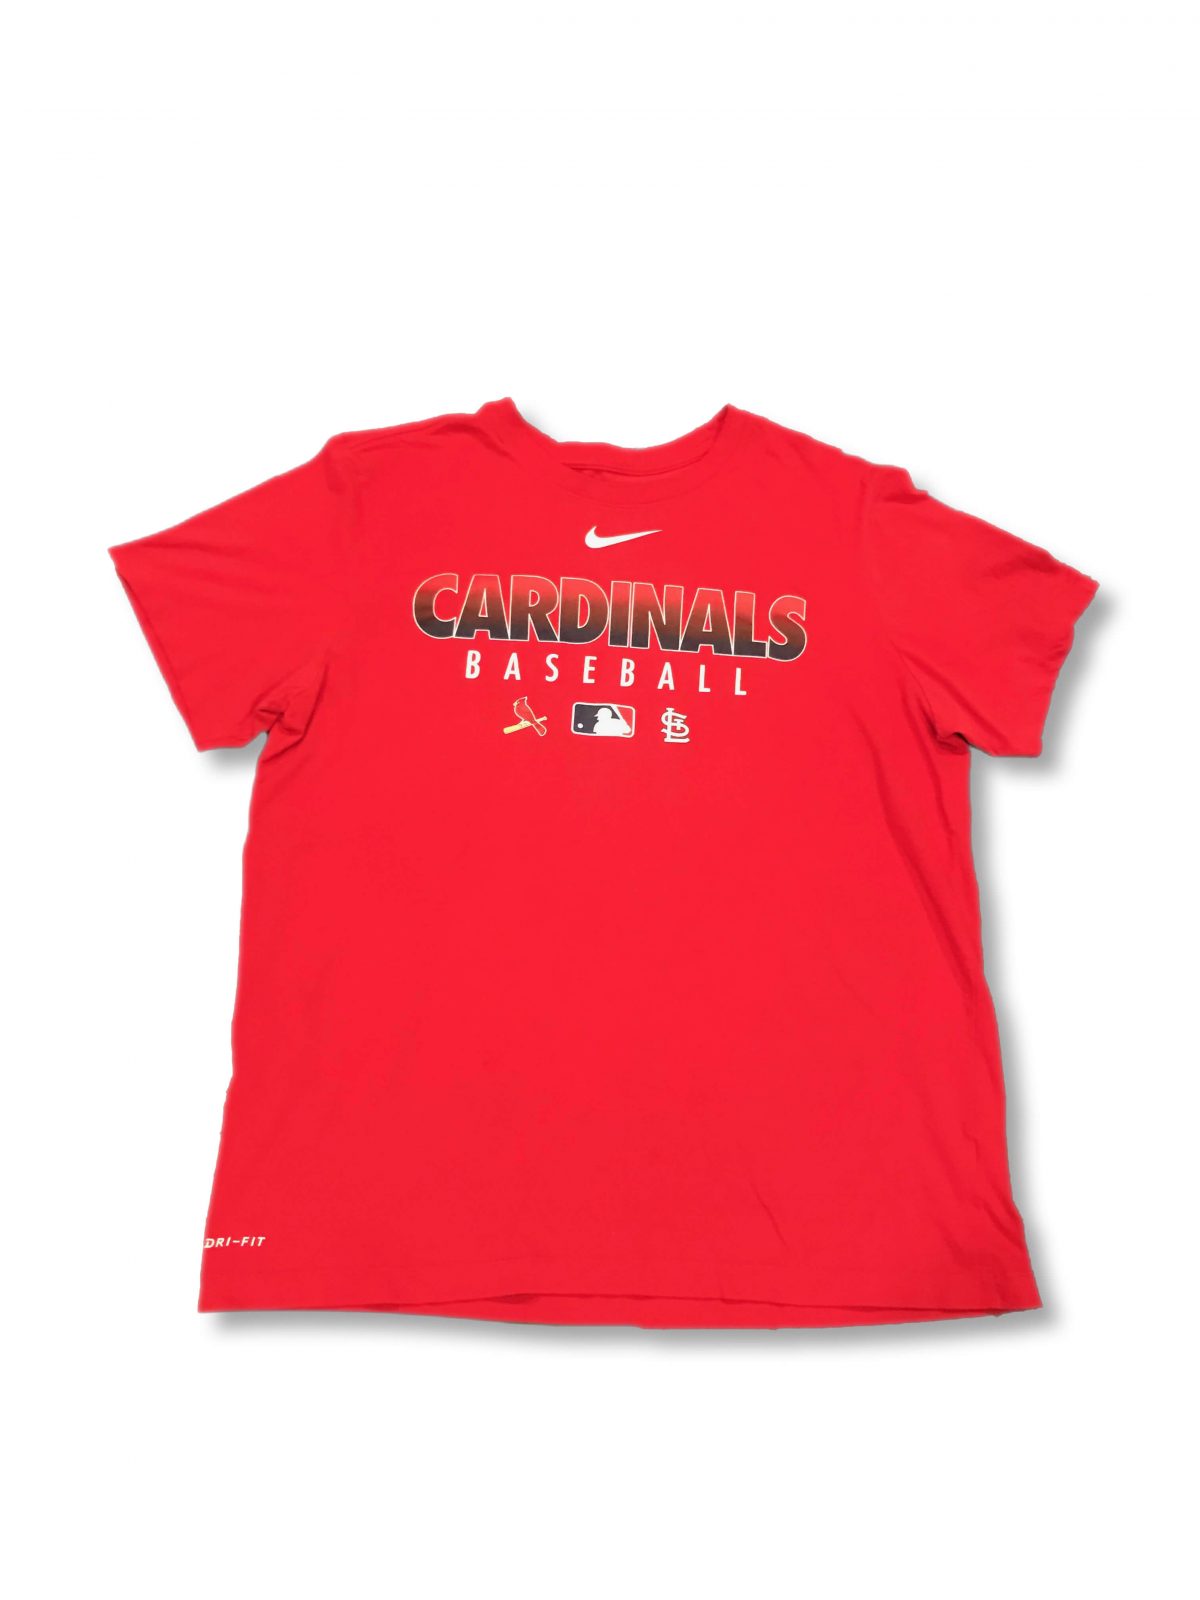 cardinals dri fit shirt